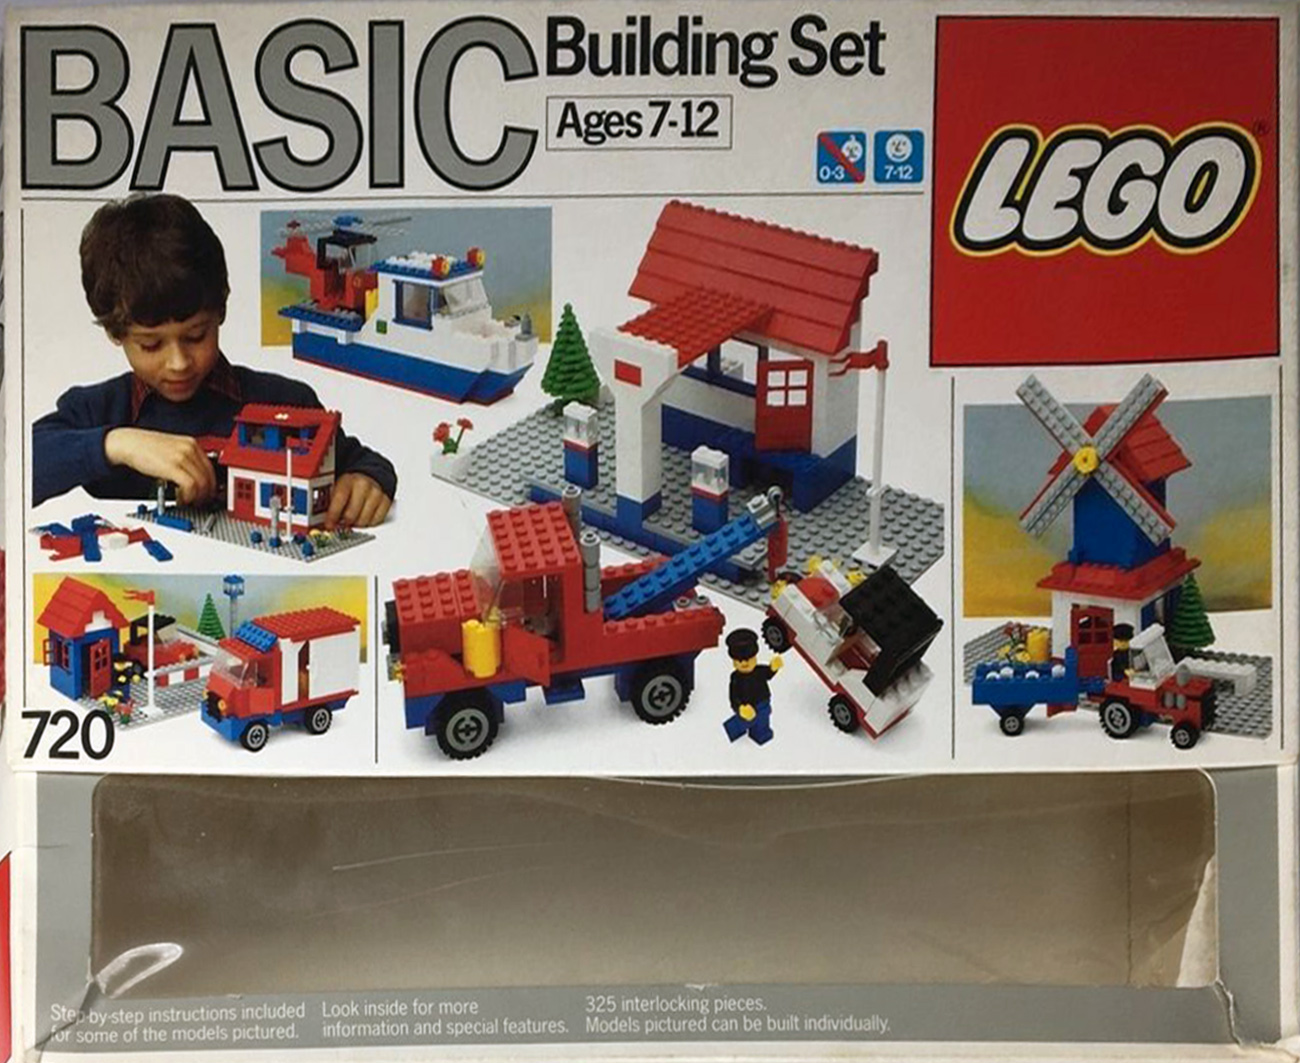 720: Basic Building Set